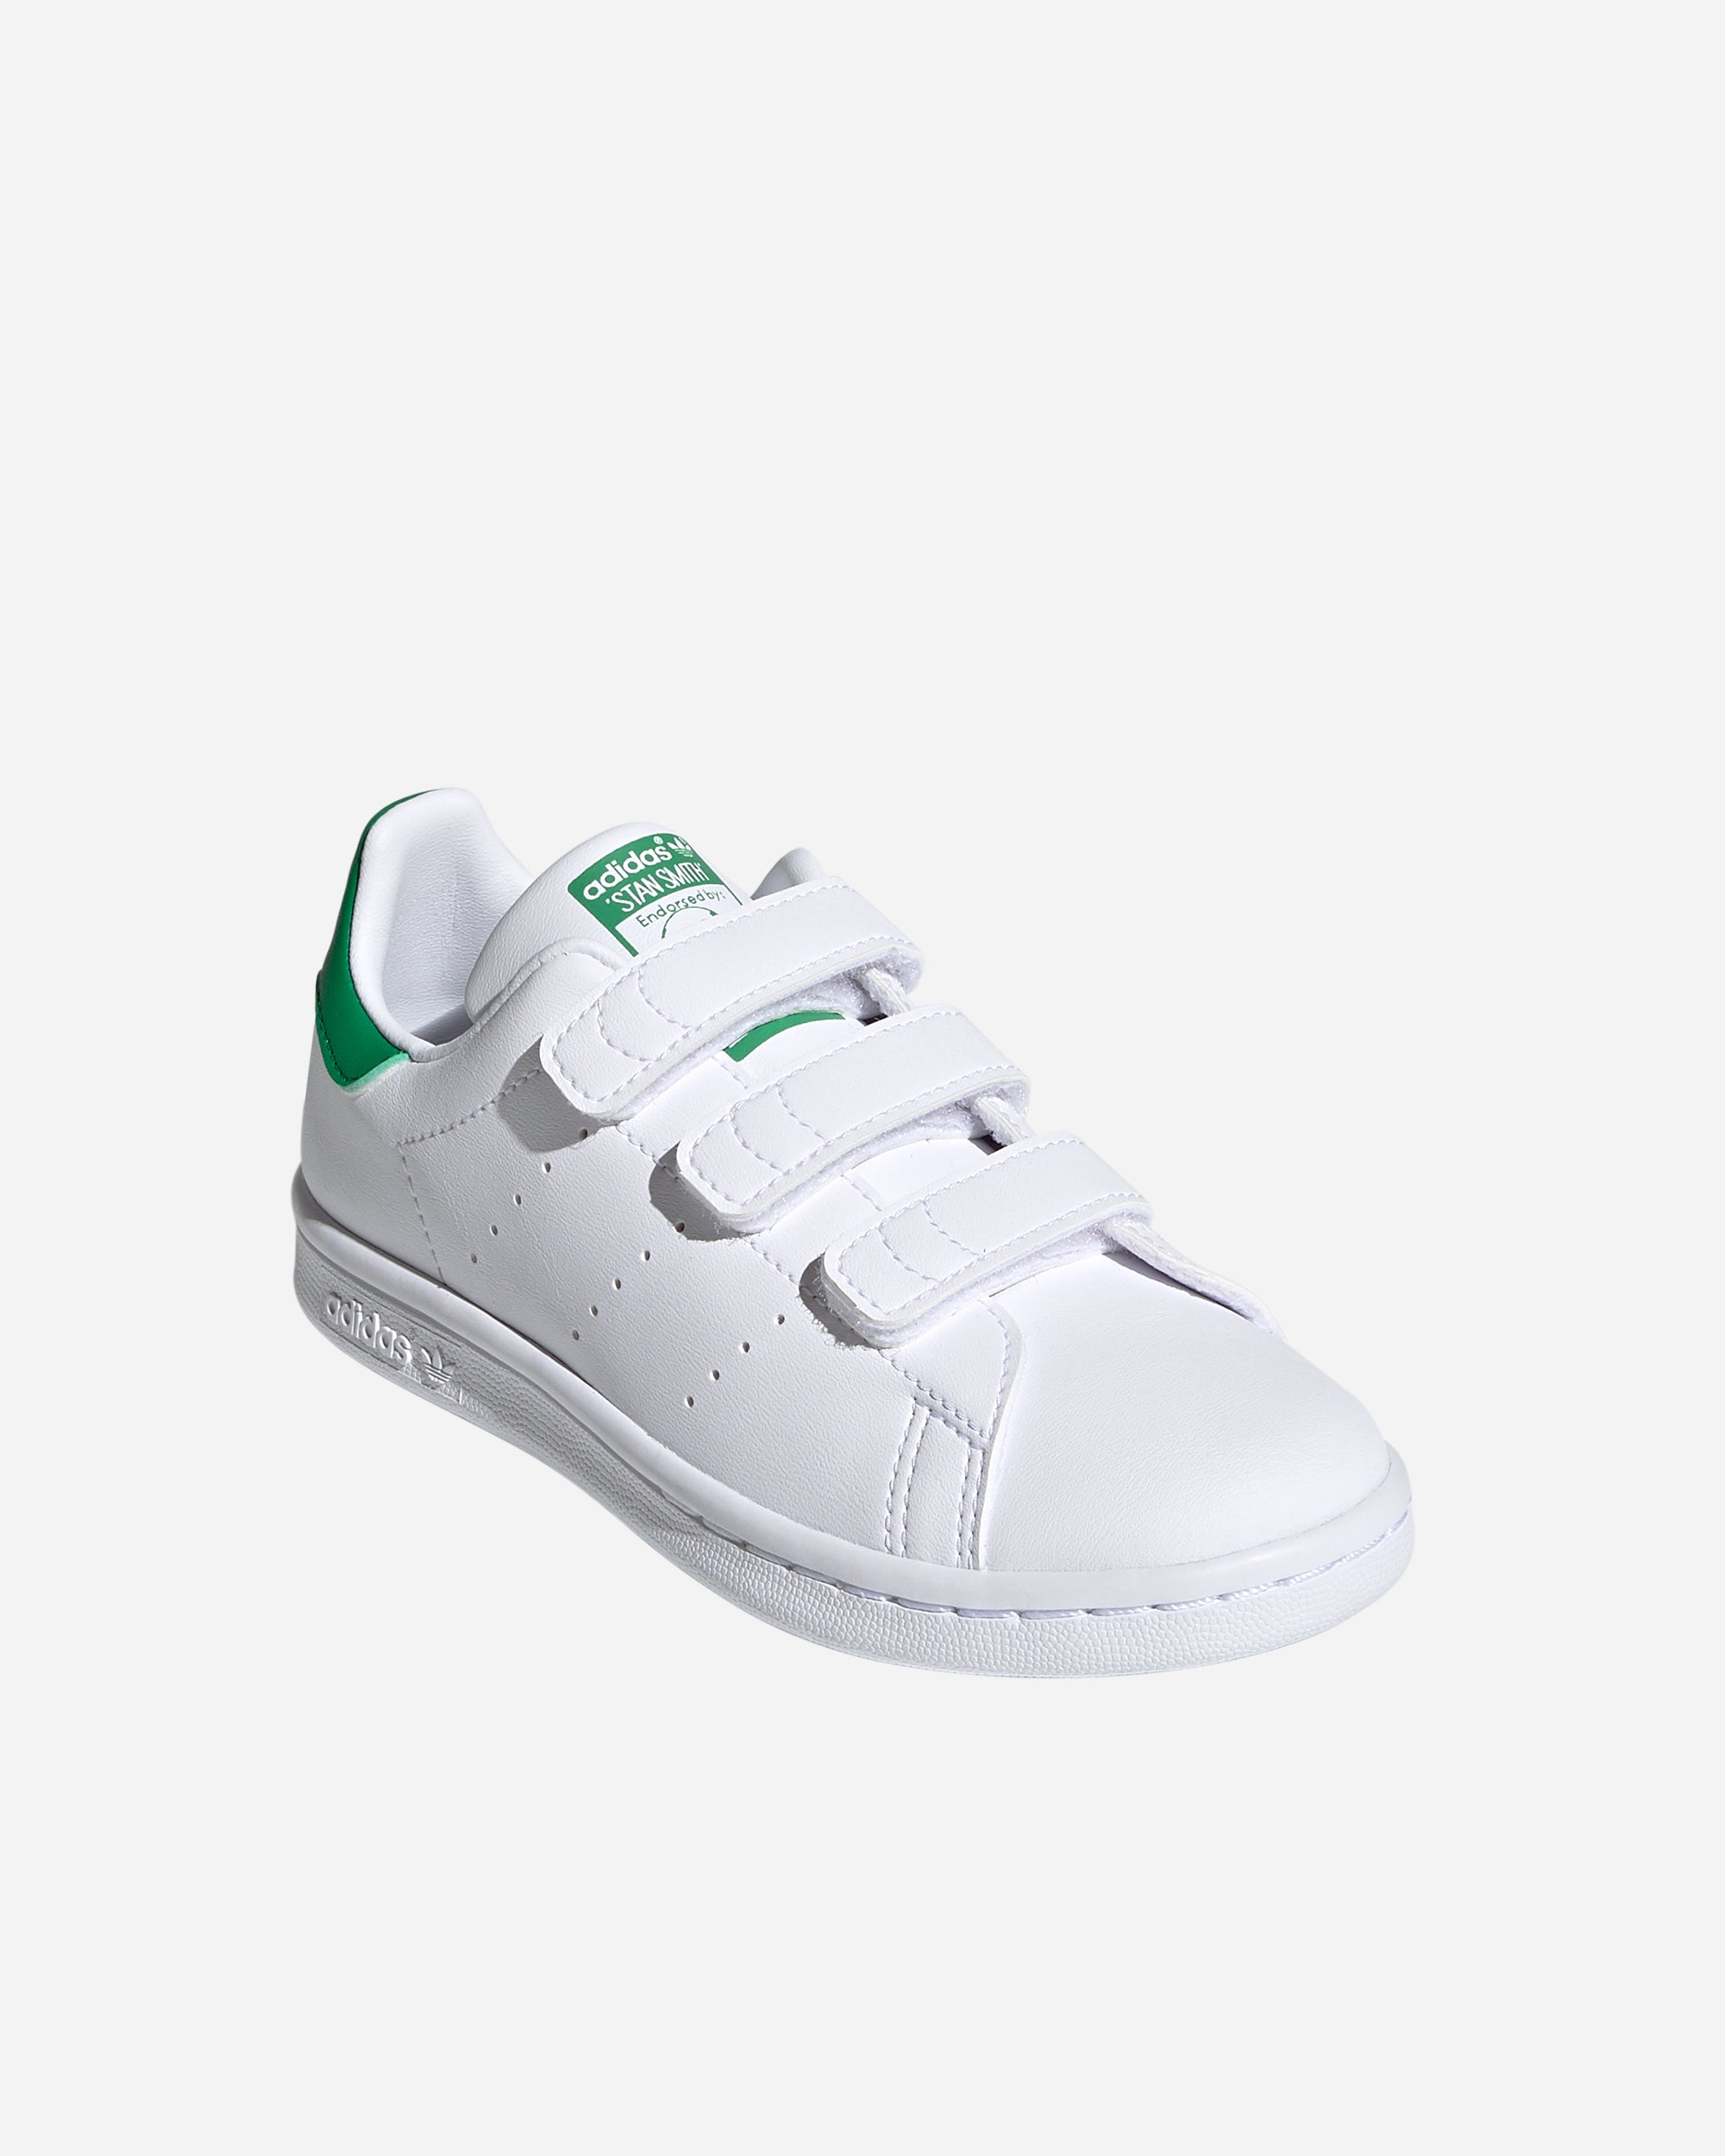 adidas Originals Stan Smith CF (Preschool) White  FX7534